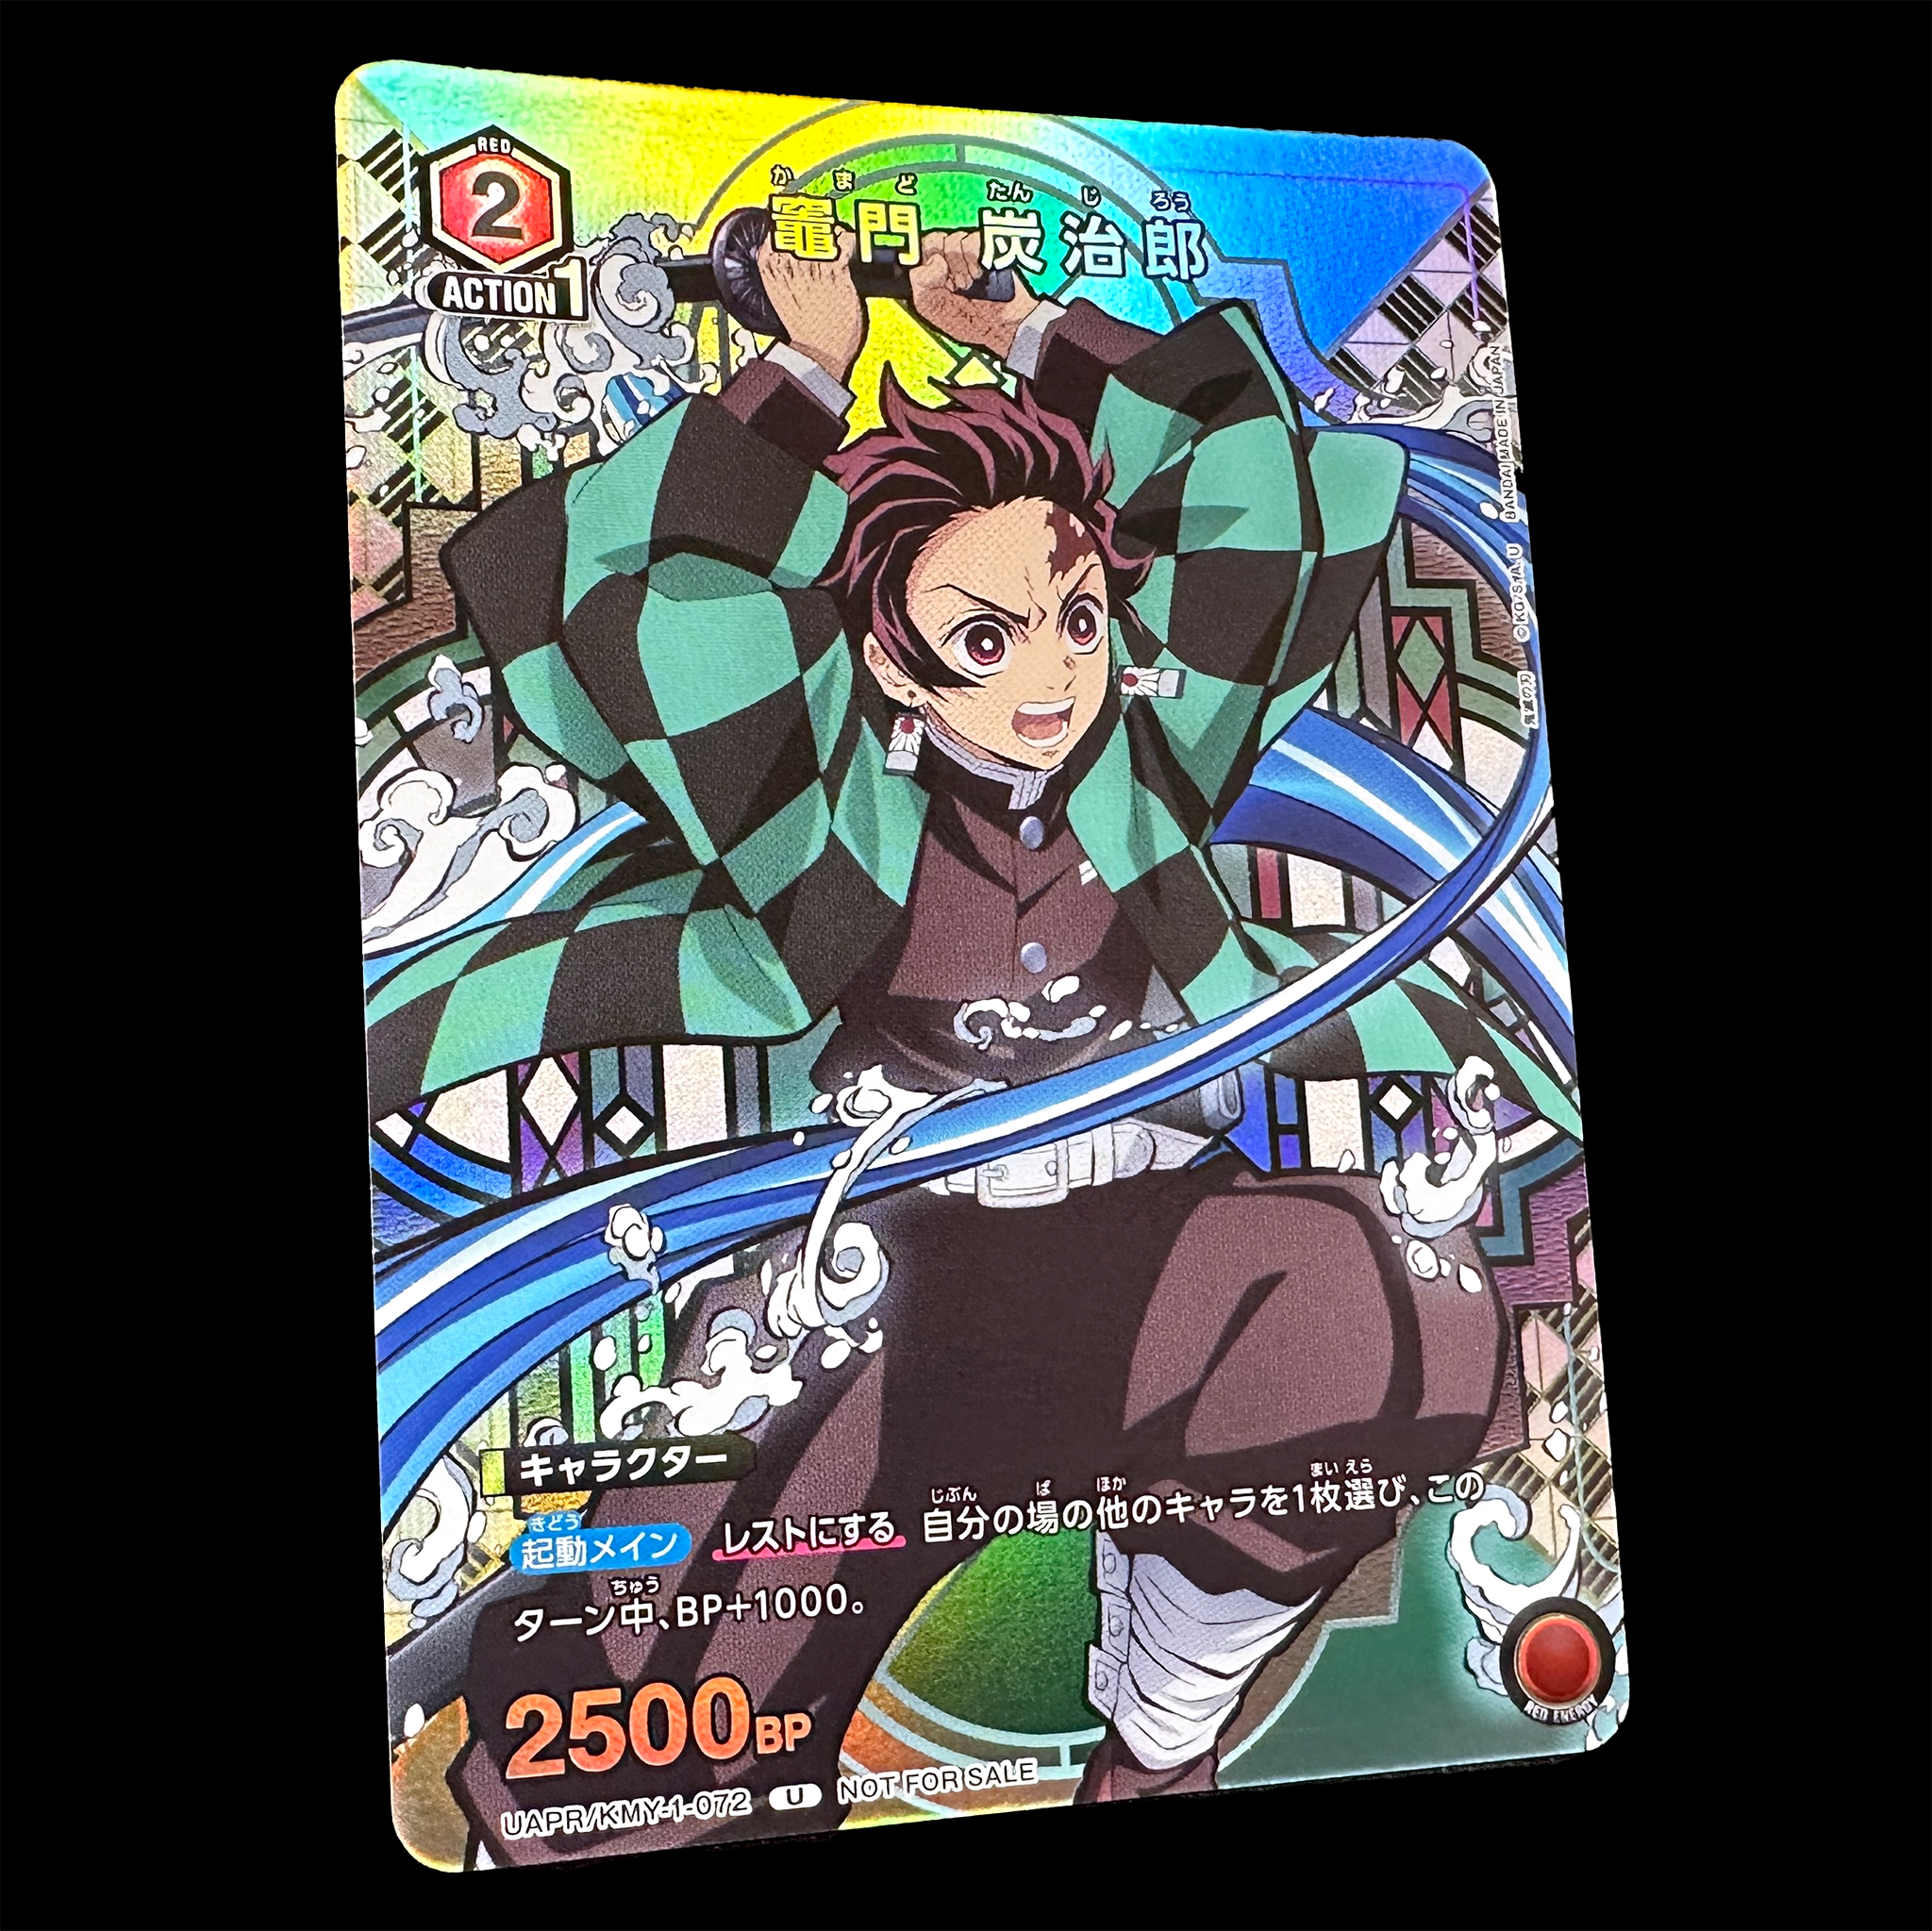 My Hero Academia card game Midoriya Izuku UAPR/MHA-1-058